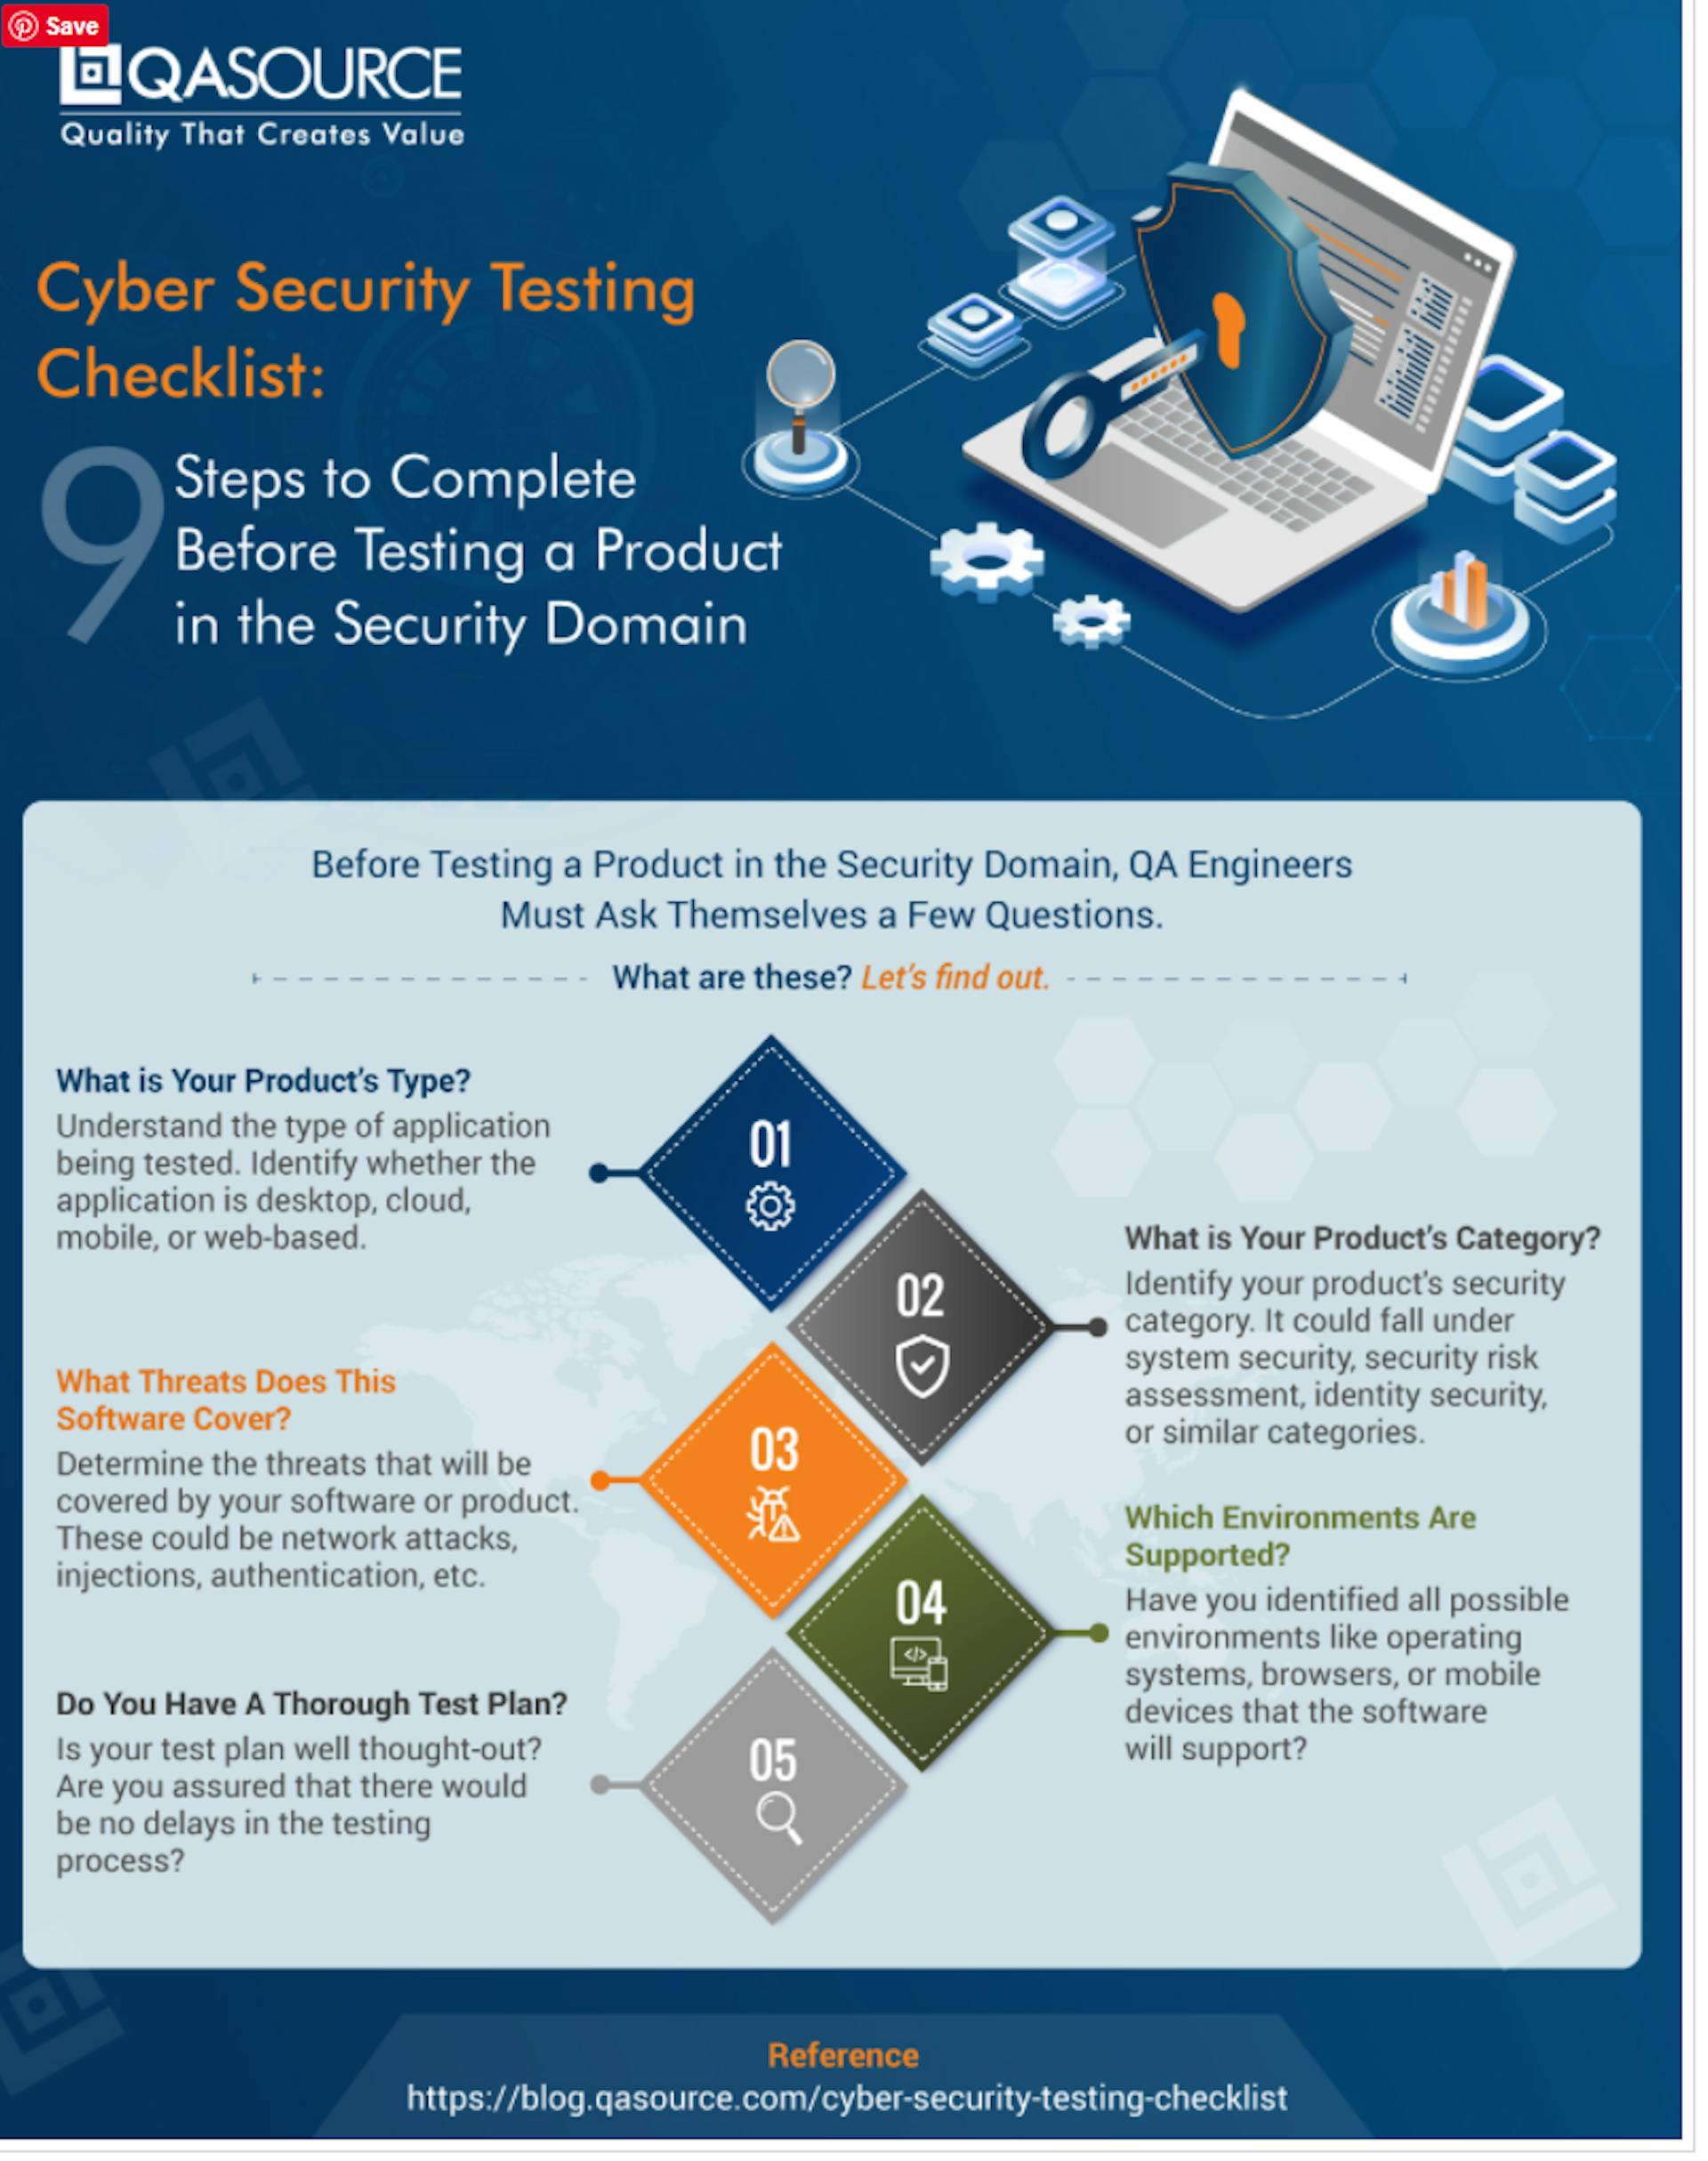 Cyber security testing checklist | https://blog.qasource.com/cyber-security-testing-checklist-infographic